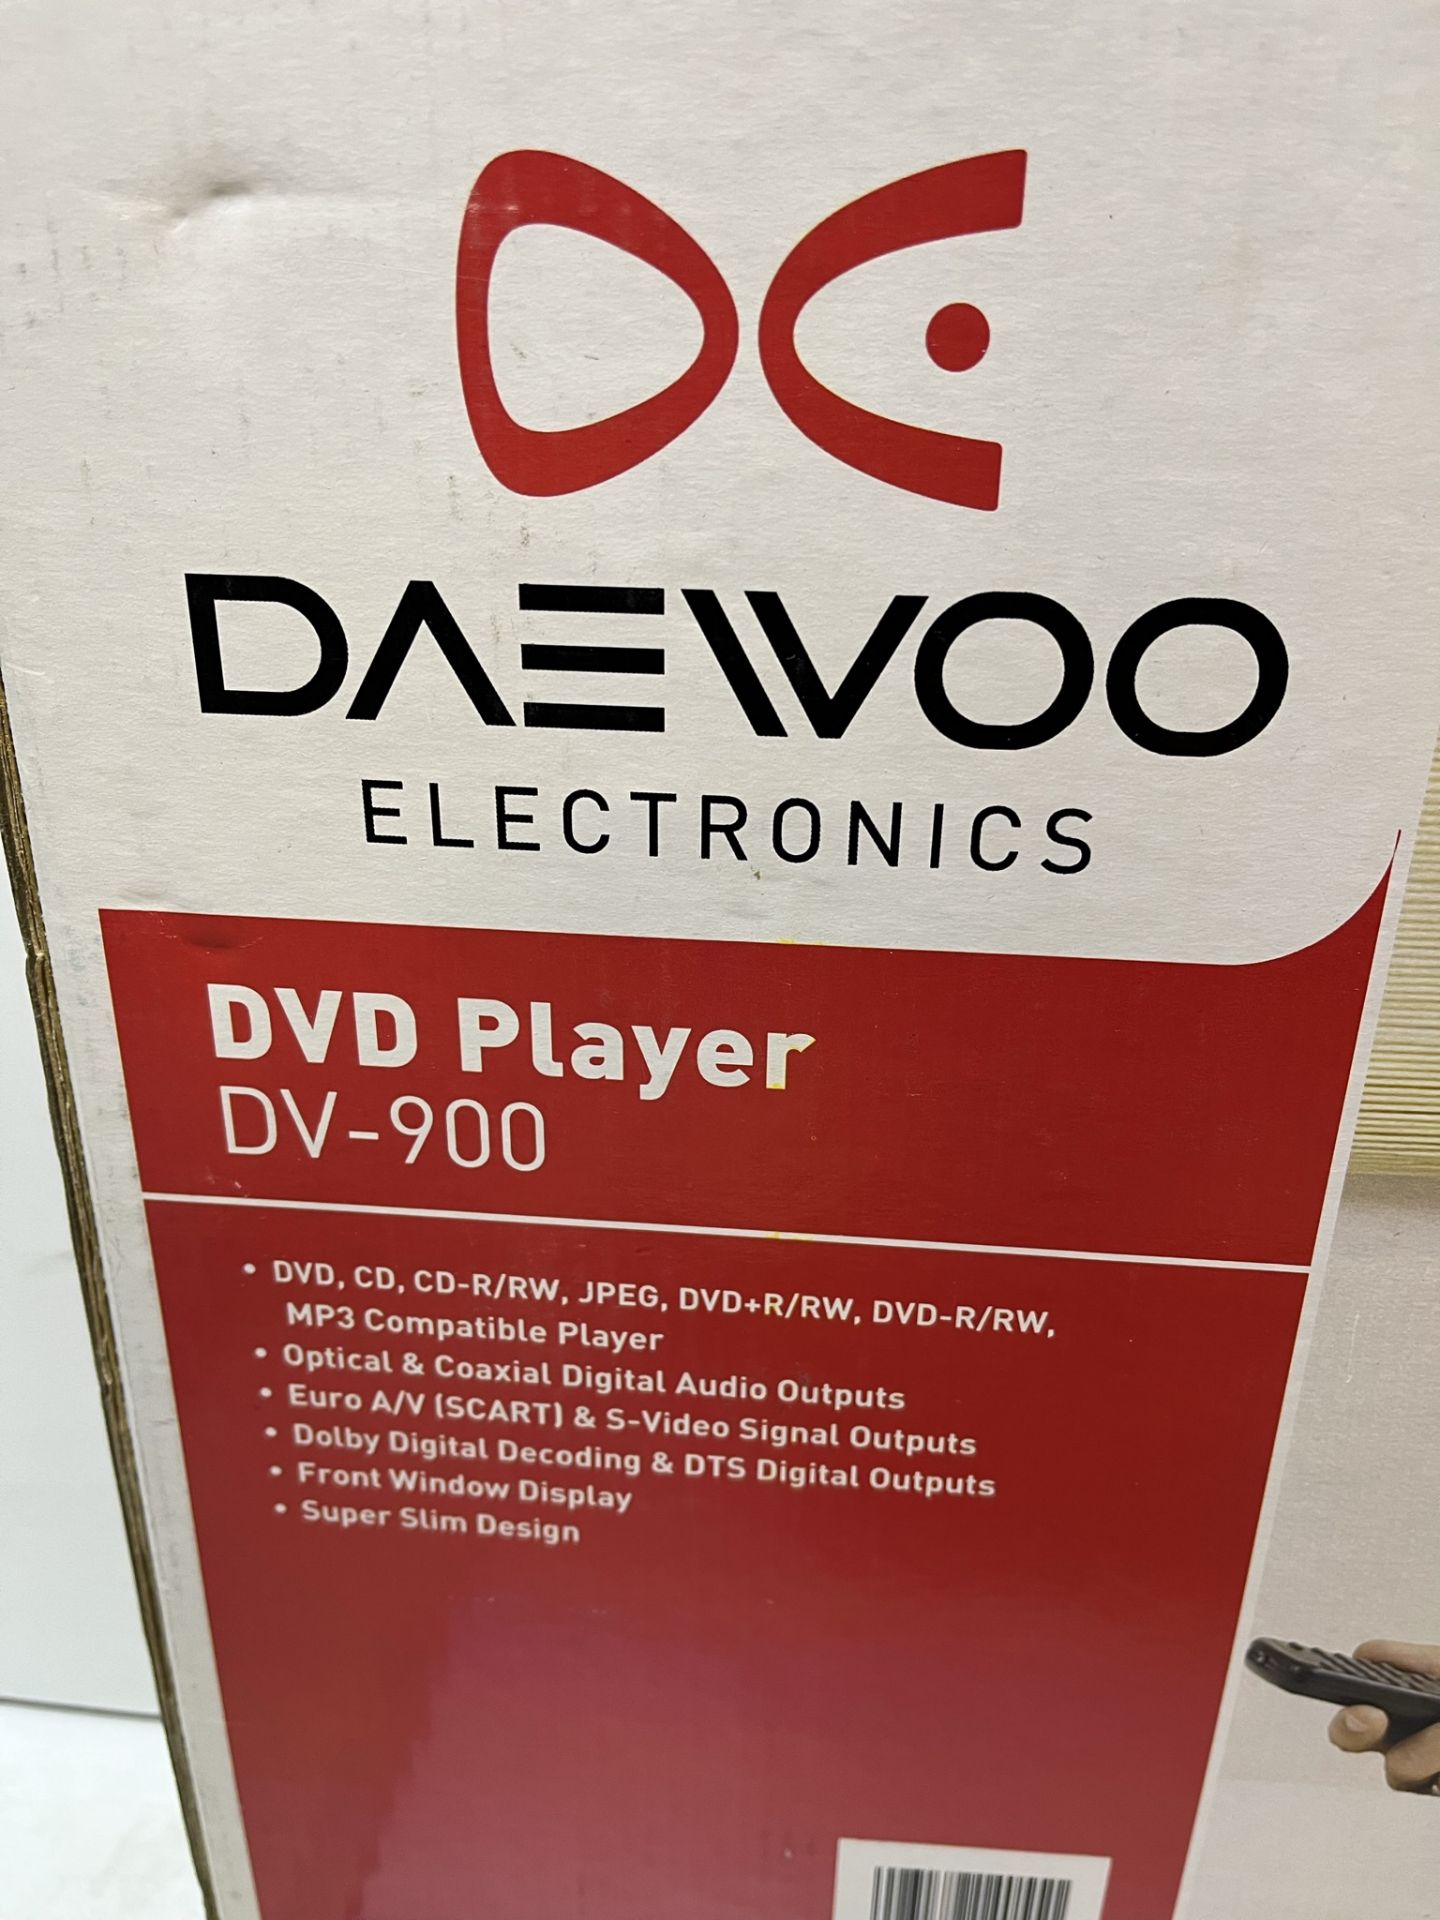 Daewoo DV-900 DVD Player - Image 4 of 4